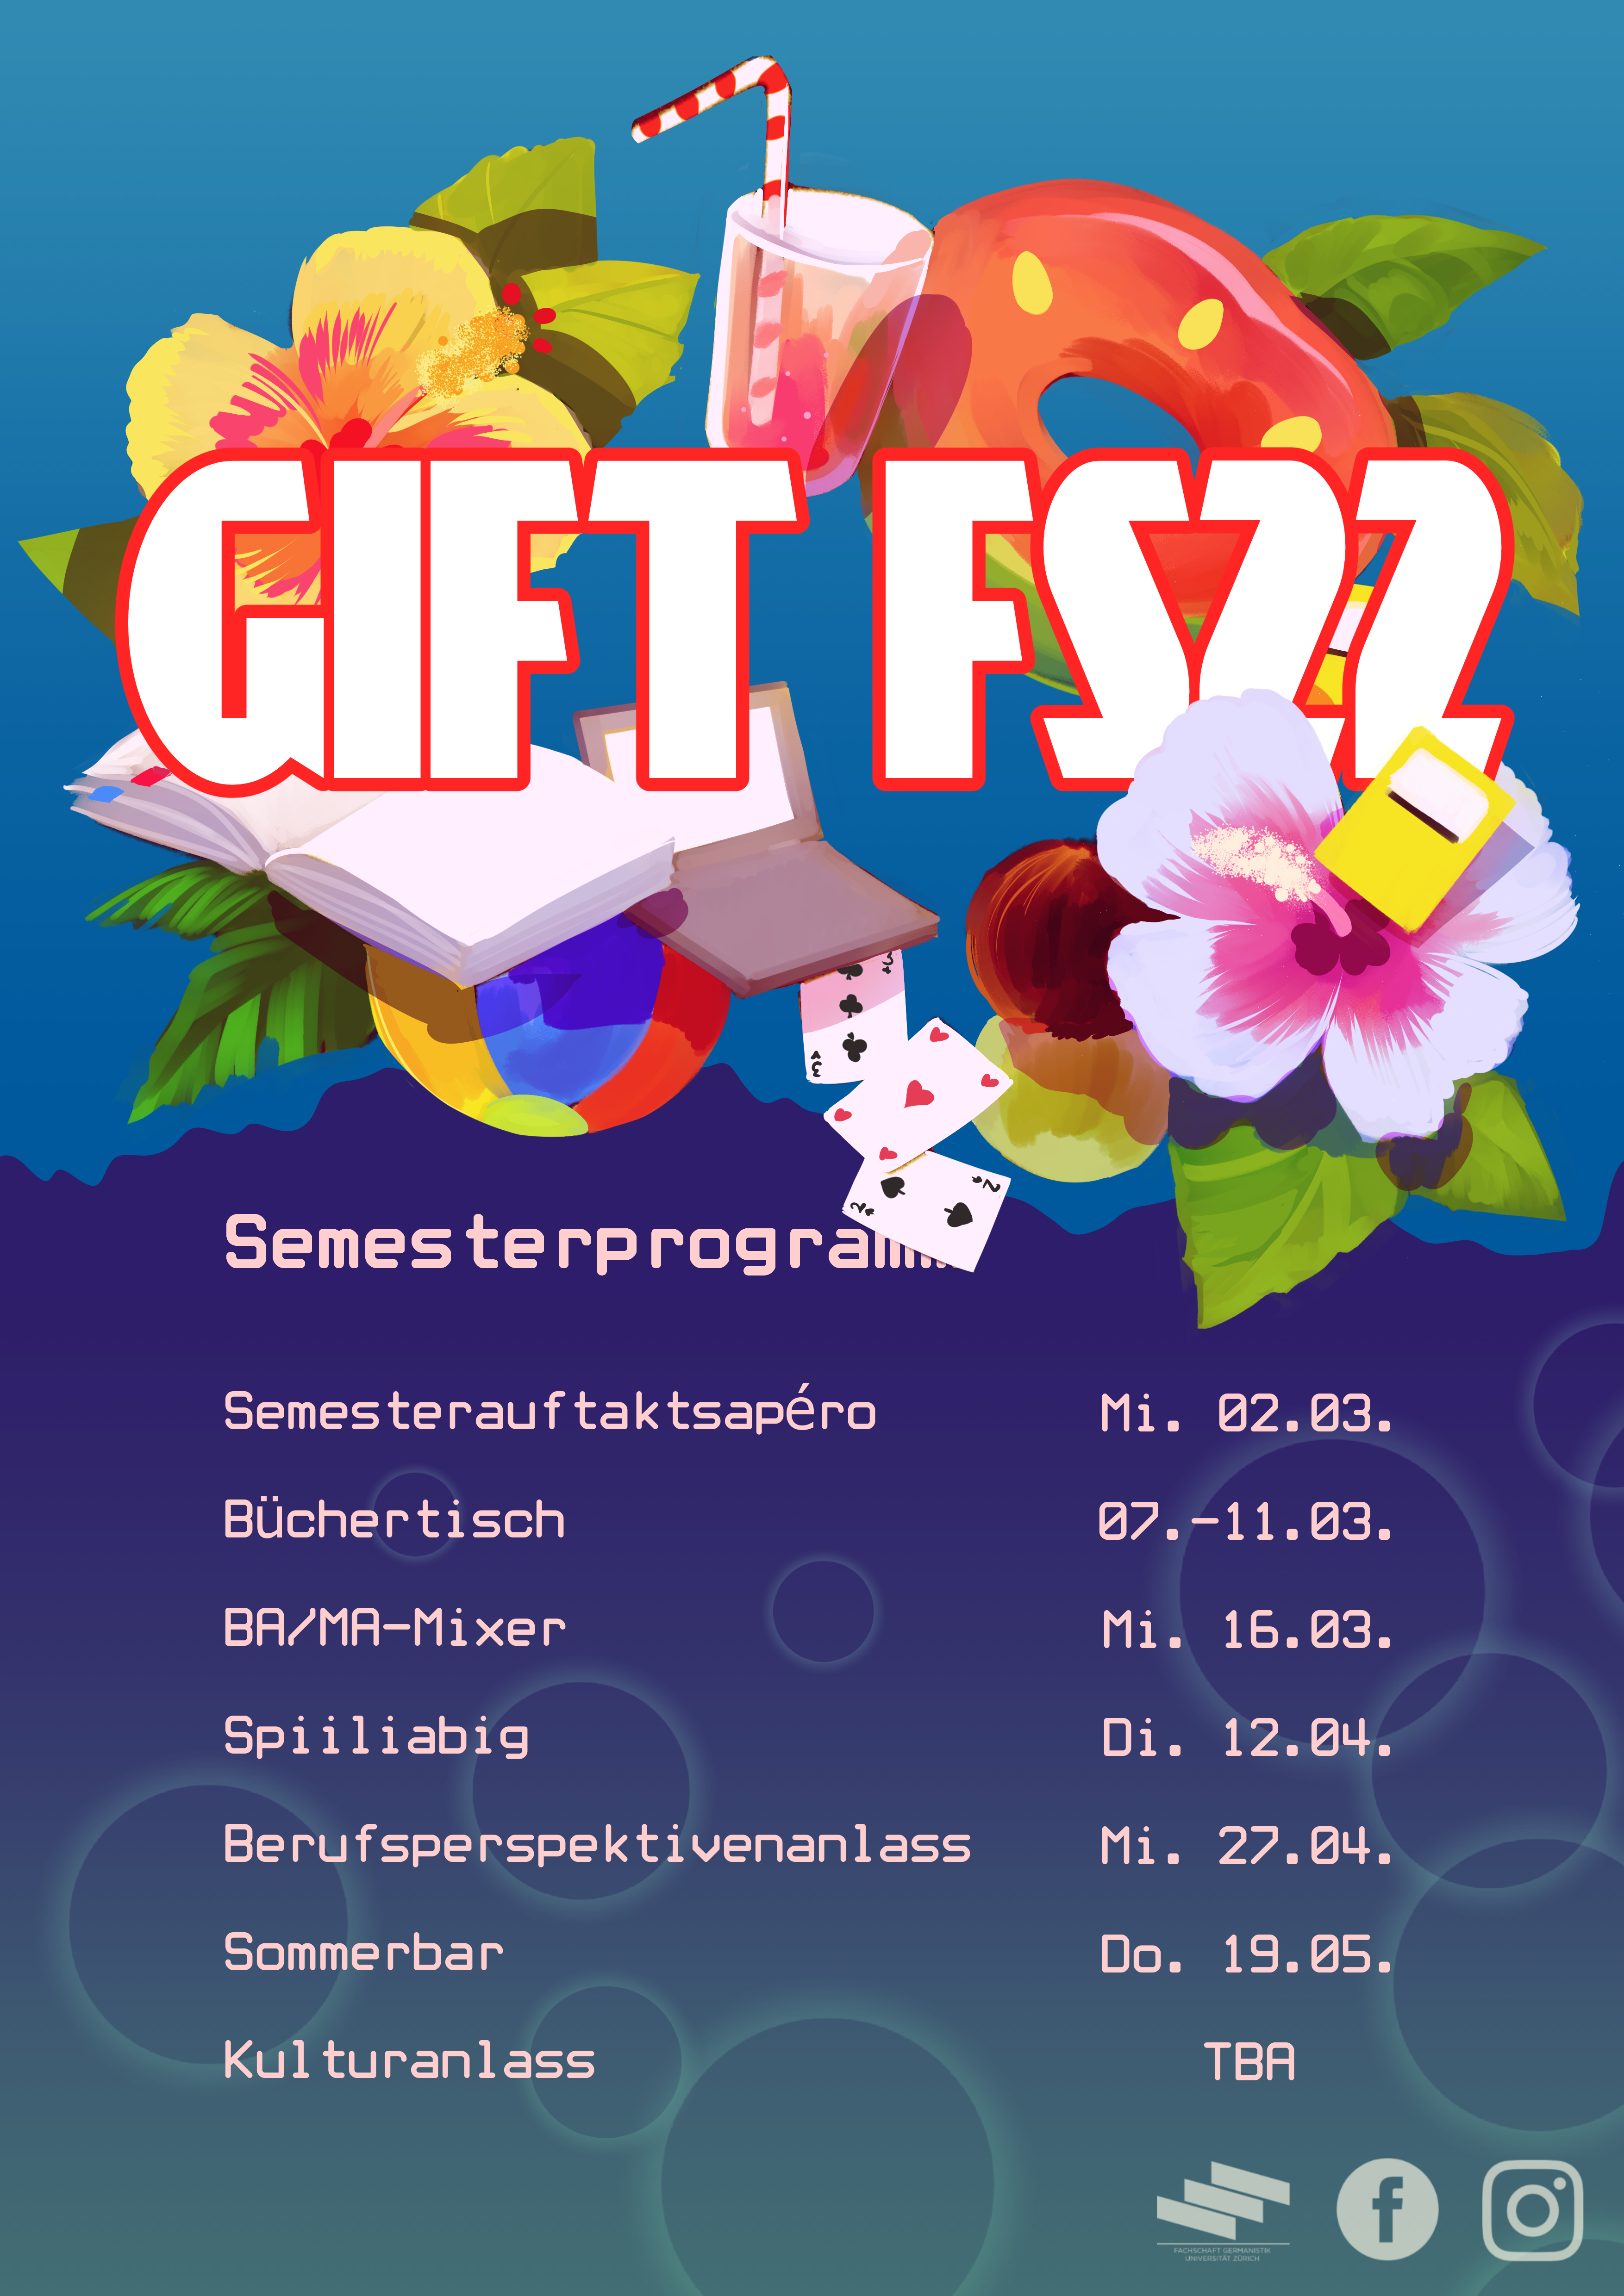 Semesterprogramm GIFT FS22